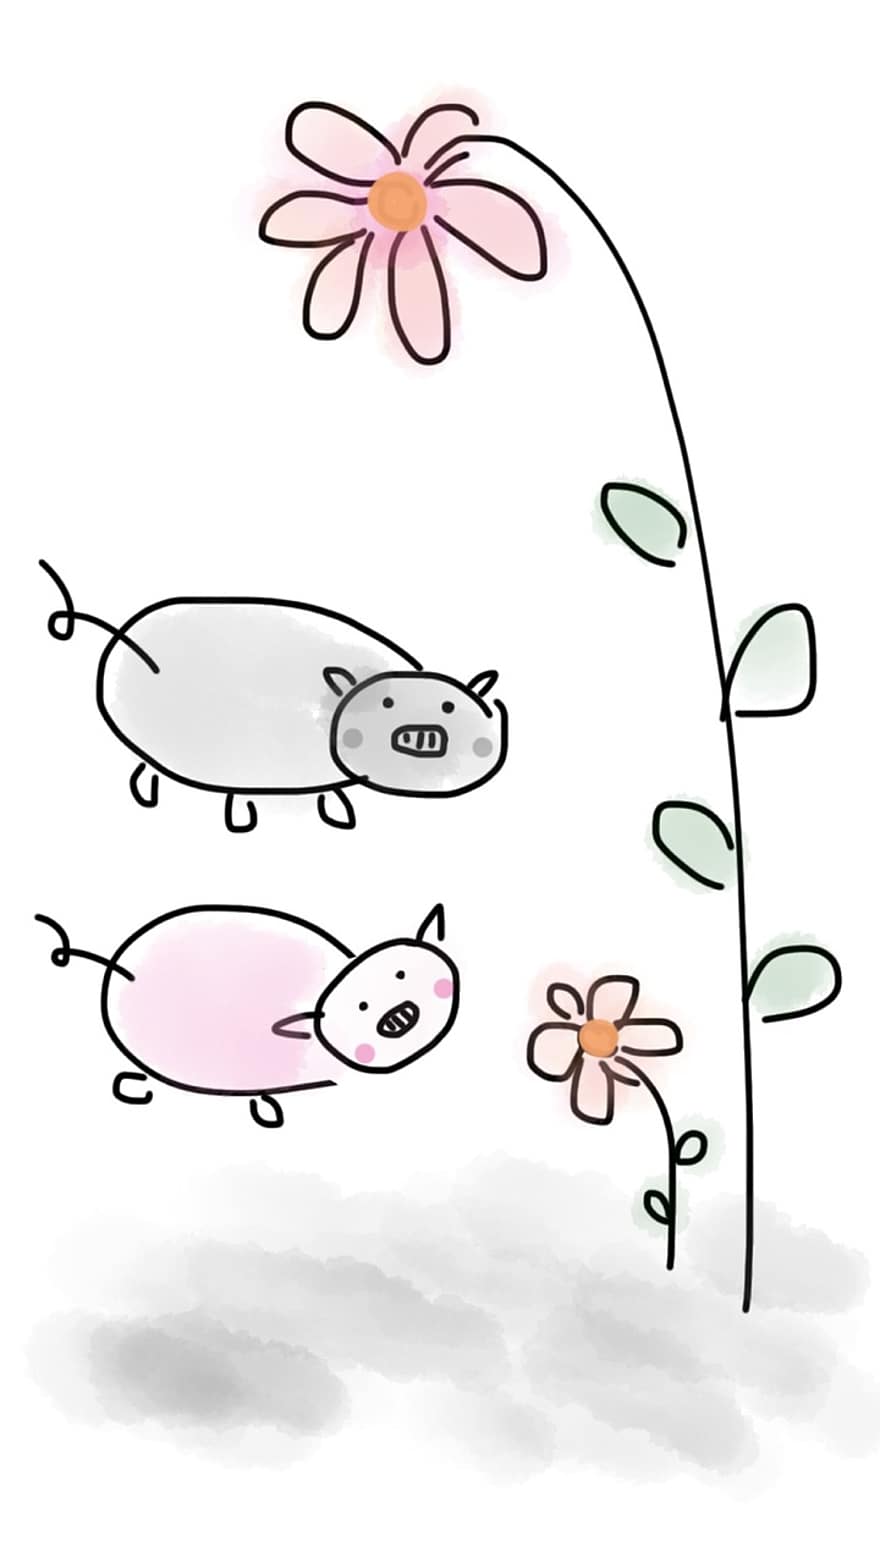 Piggy, Pig, Piglet, Flower, Pink Flowers, Happy, Joyful, Outdoor, Joy, Pink Pig, Grey Pick